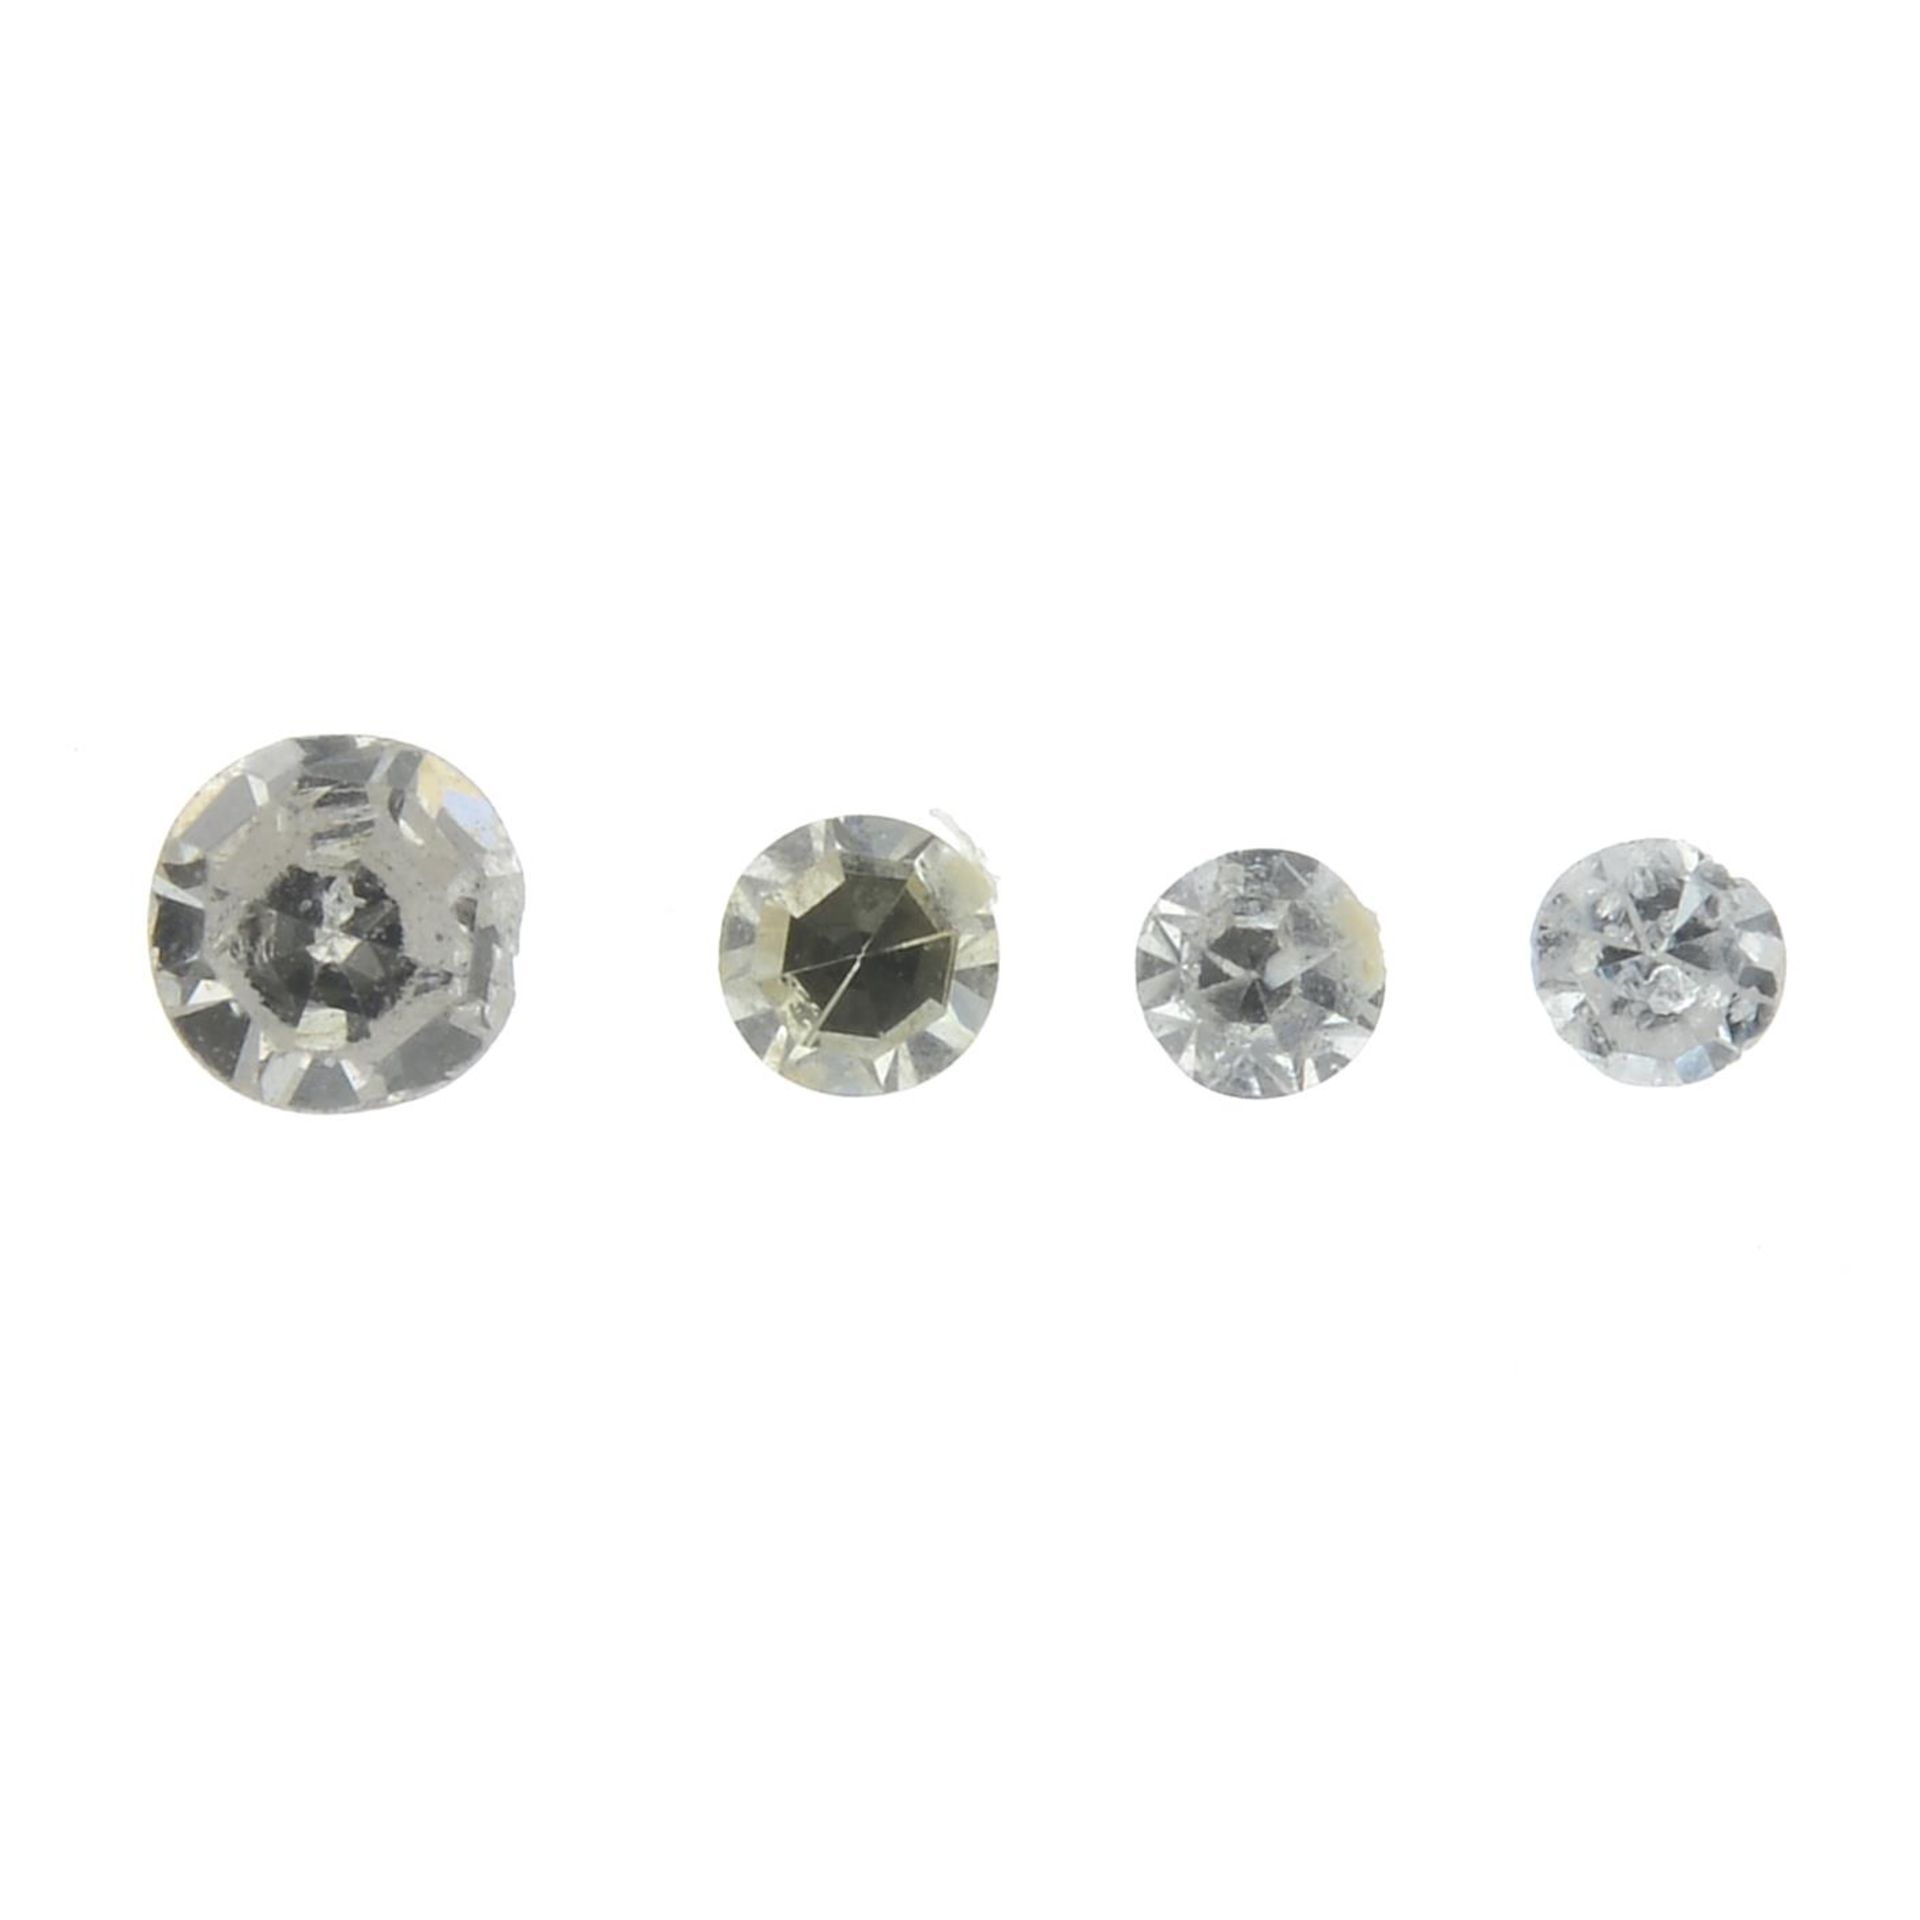 A selection of single-cut diamonds.